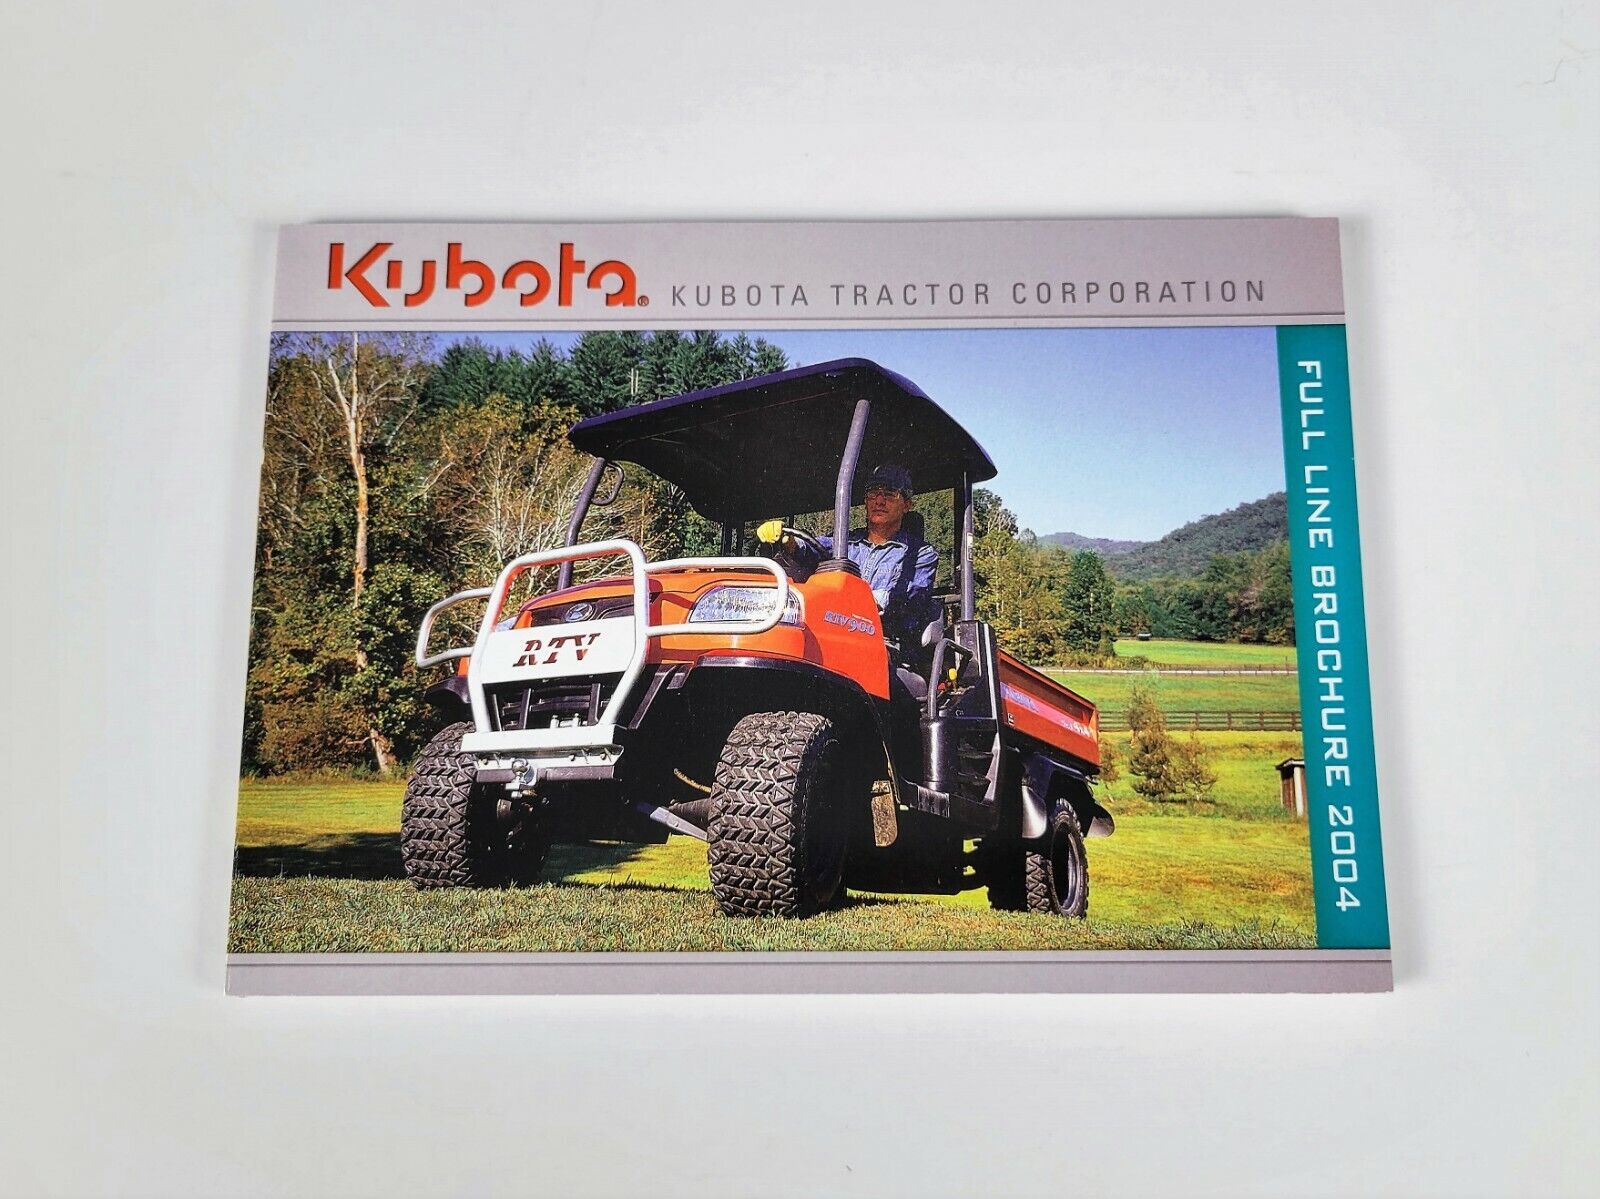 Original 2004 Kubota Full Product Line USA Brochure - 76 Pages